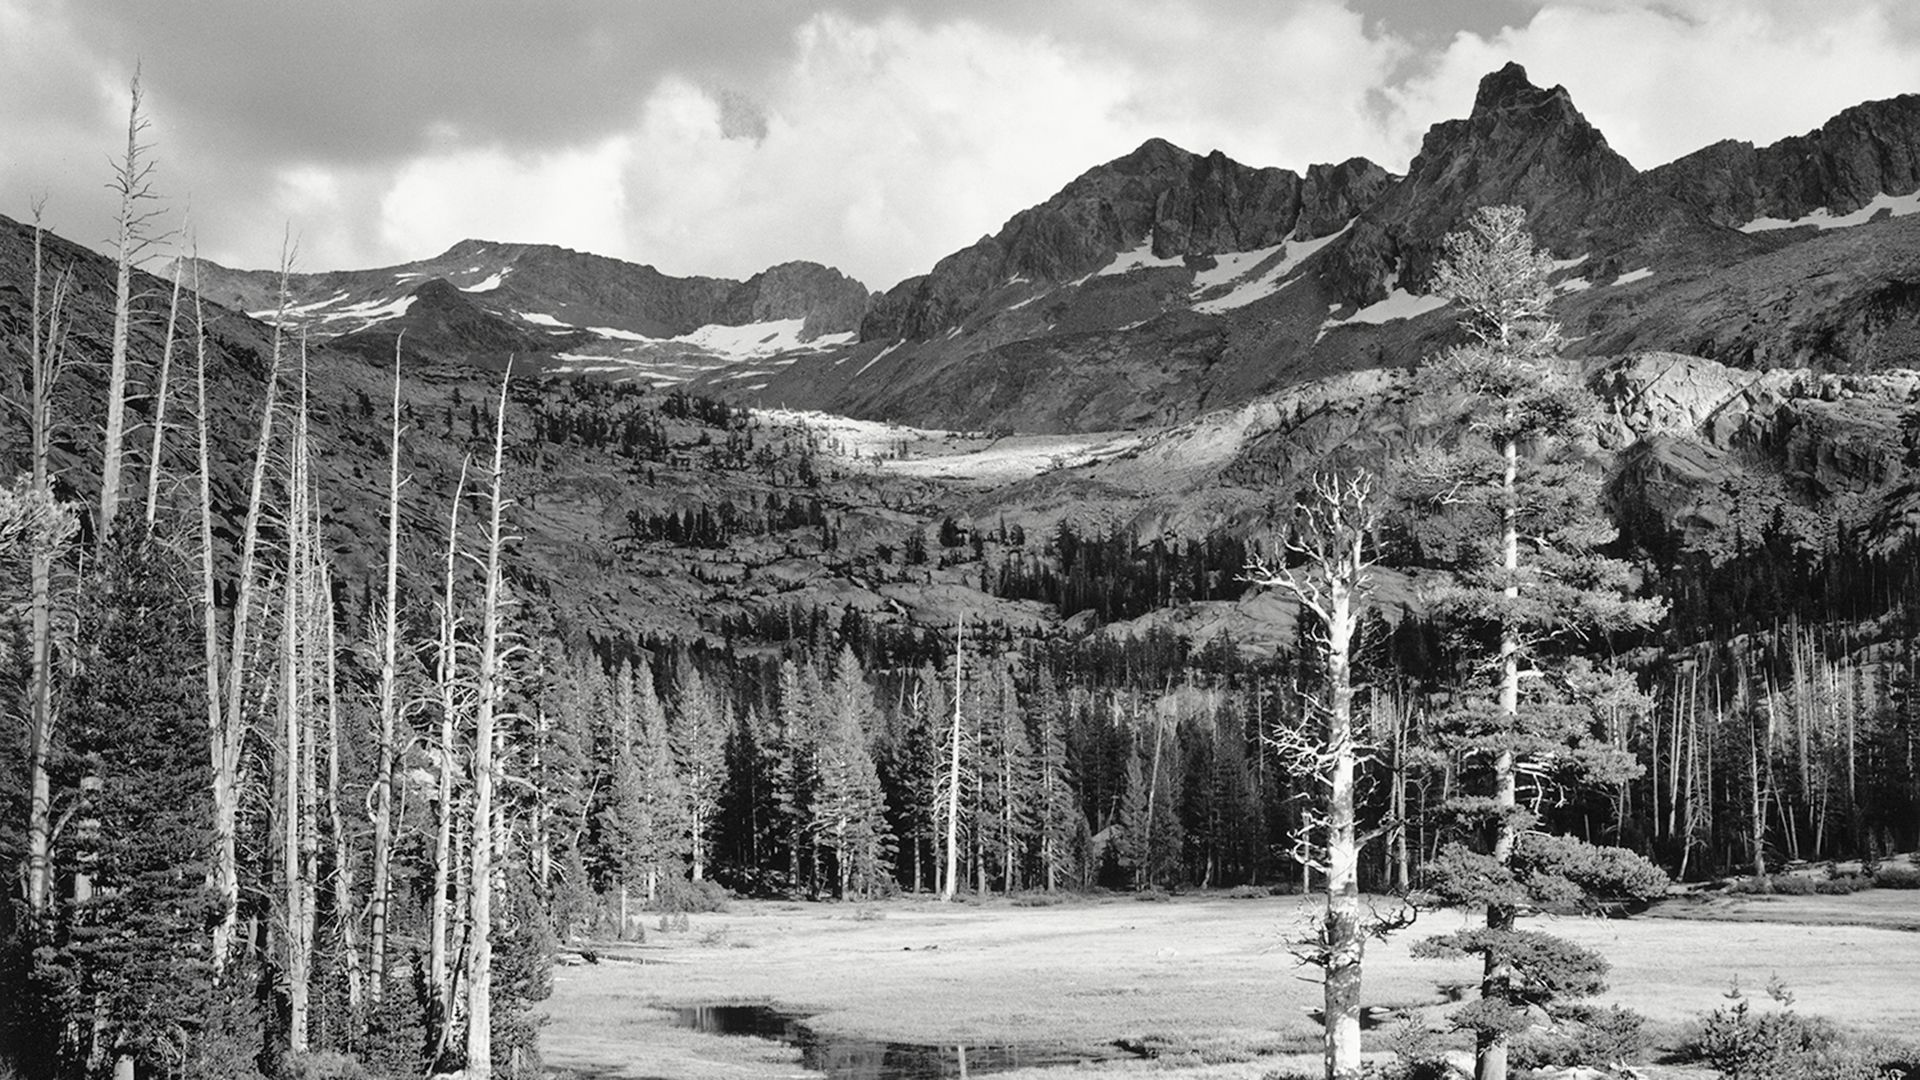 Ansel Adams captures Yosemite's breathtaking beauty